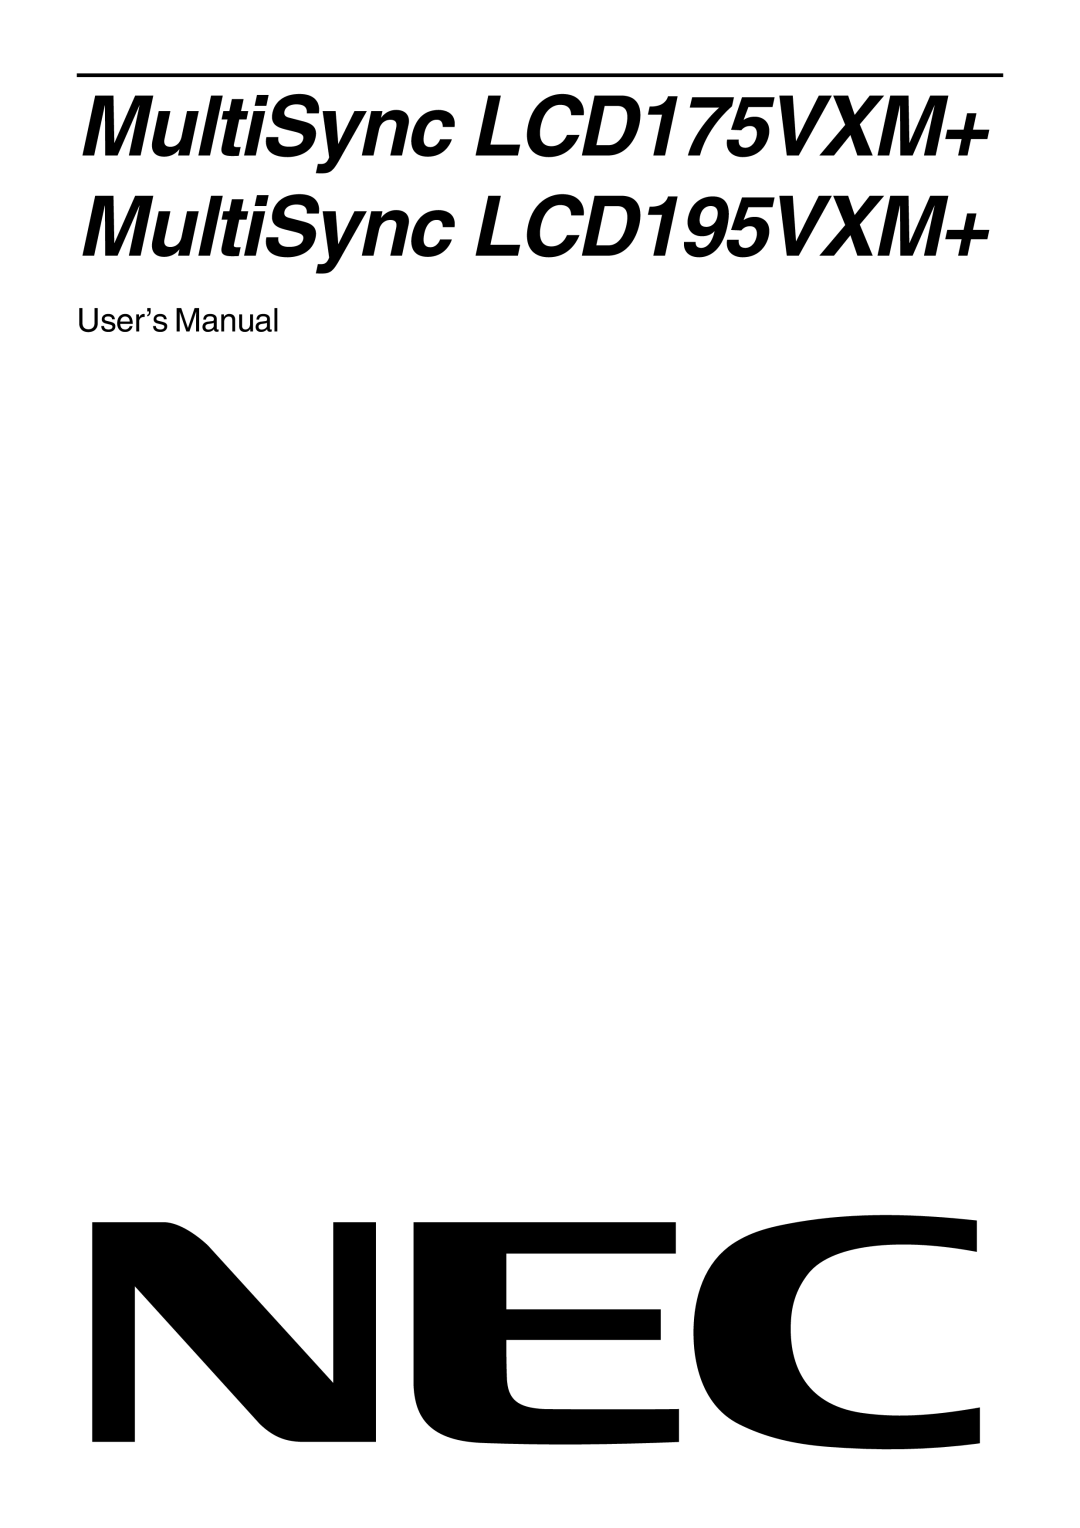 NEC user manual MultiSync LCD175VXM+ MultiSync LCD195VXM+, UserÕs Manual 